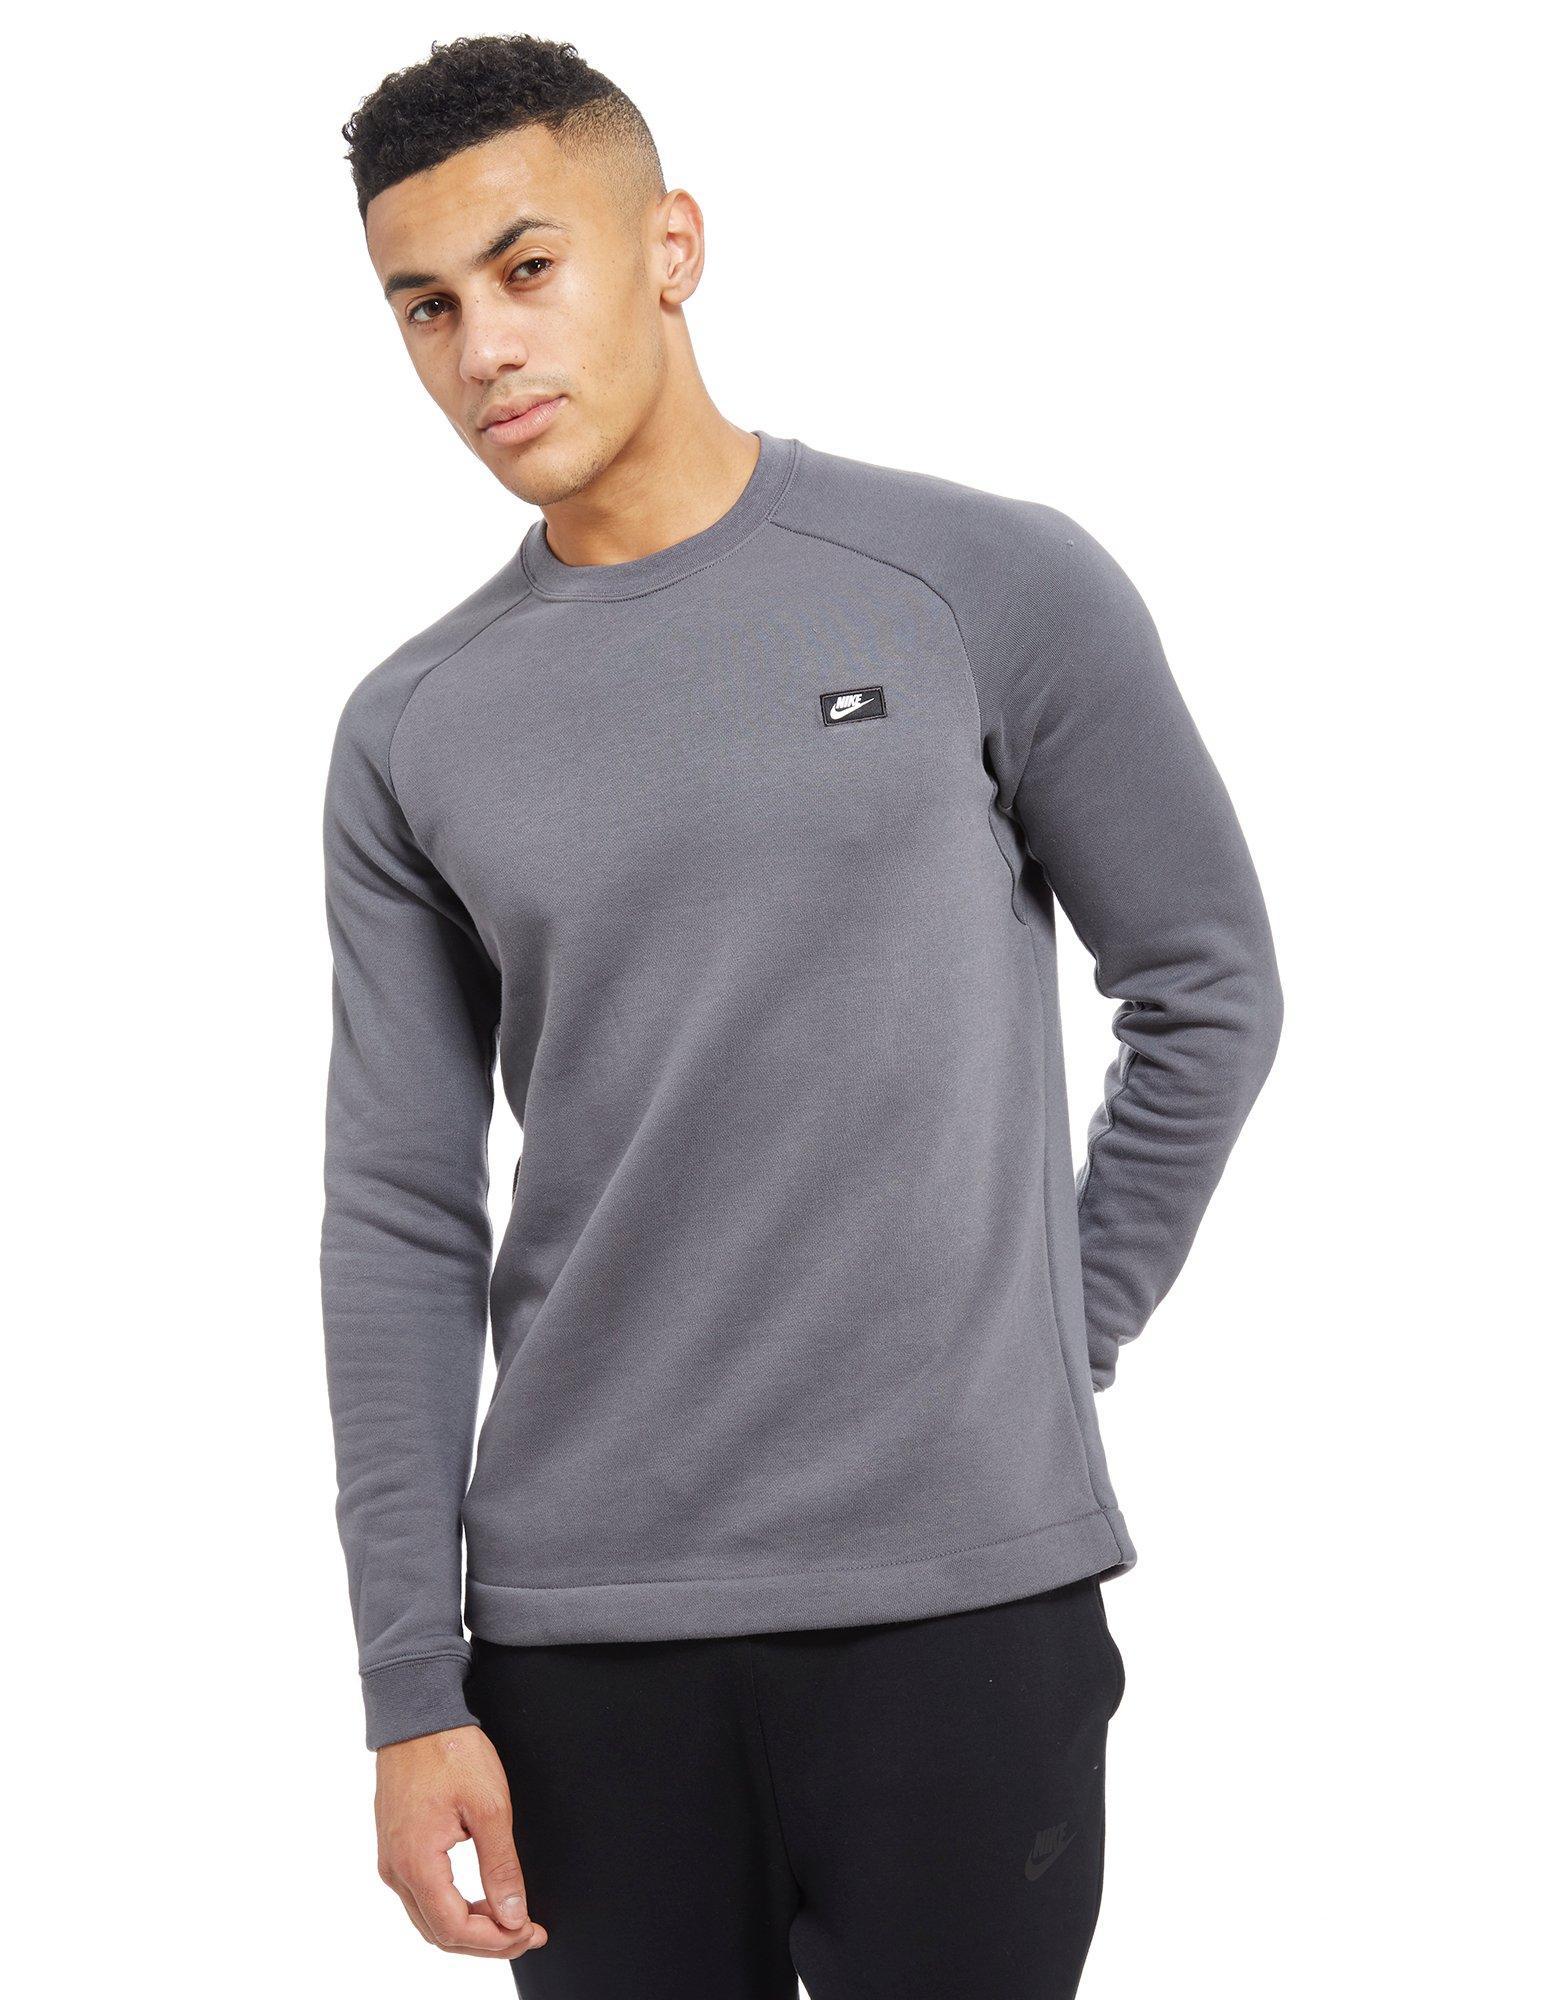 Nike Cotton Modern Crew Sweatshirt in Grey (Gray) for Men - Lyst